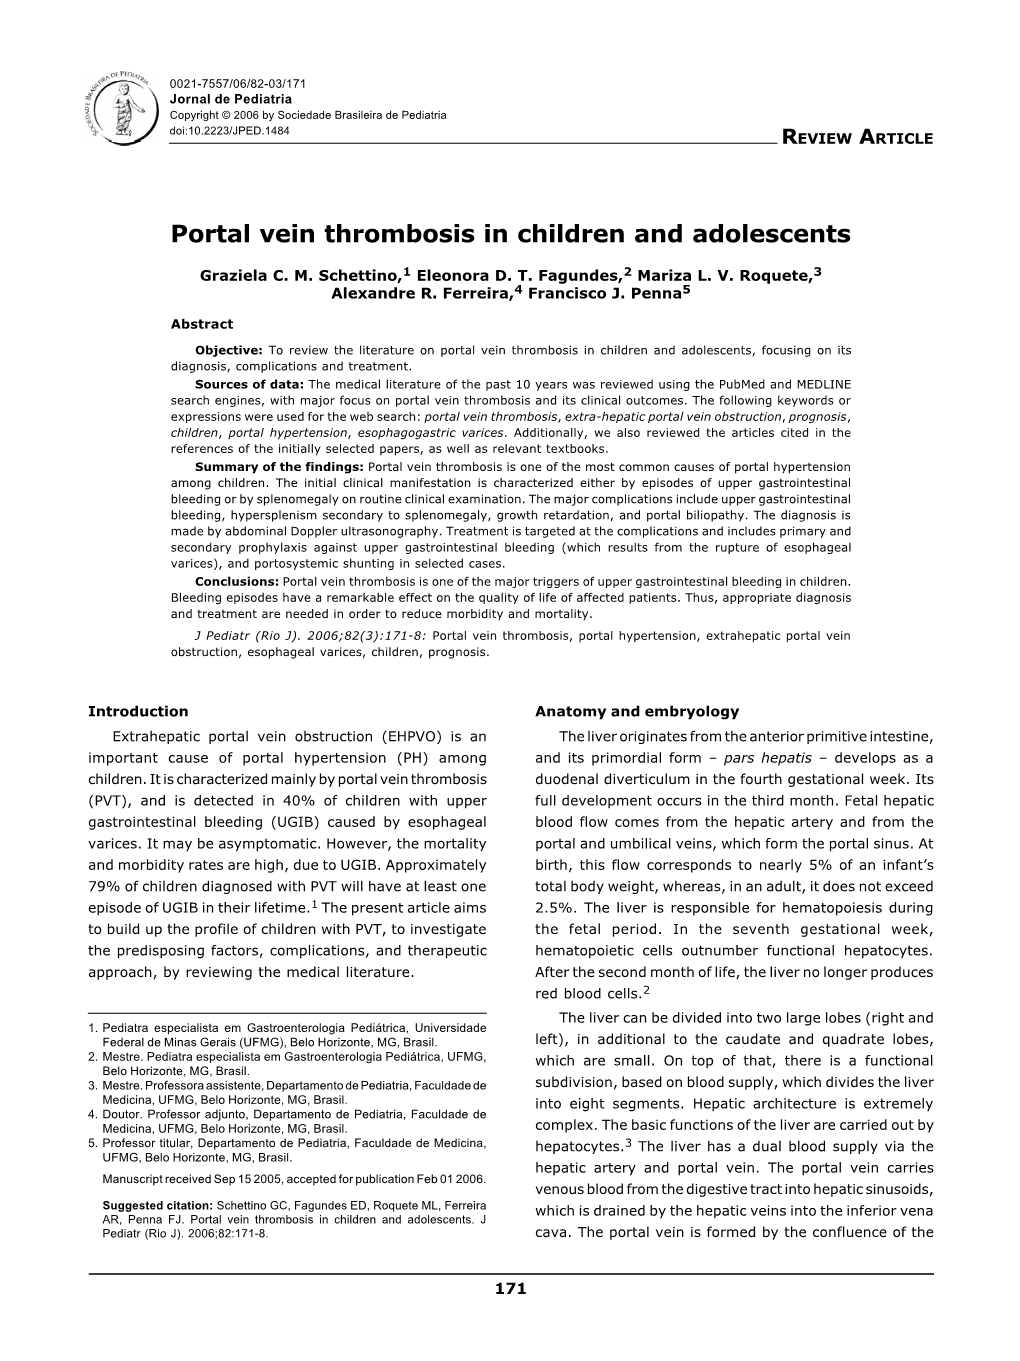 Portal Vein Thrombosis in Children and Adolescents